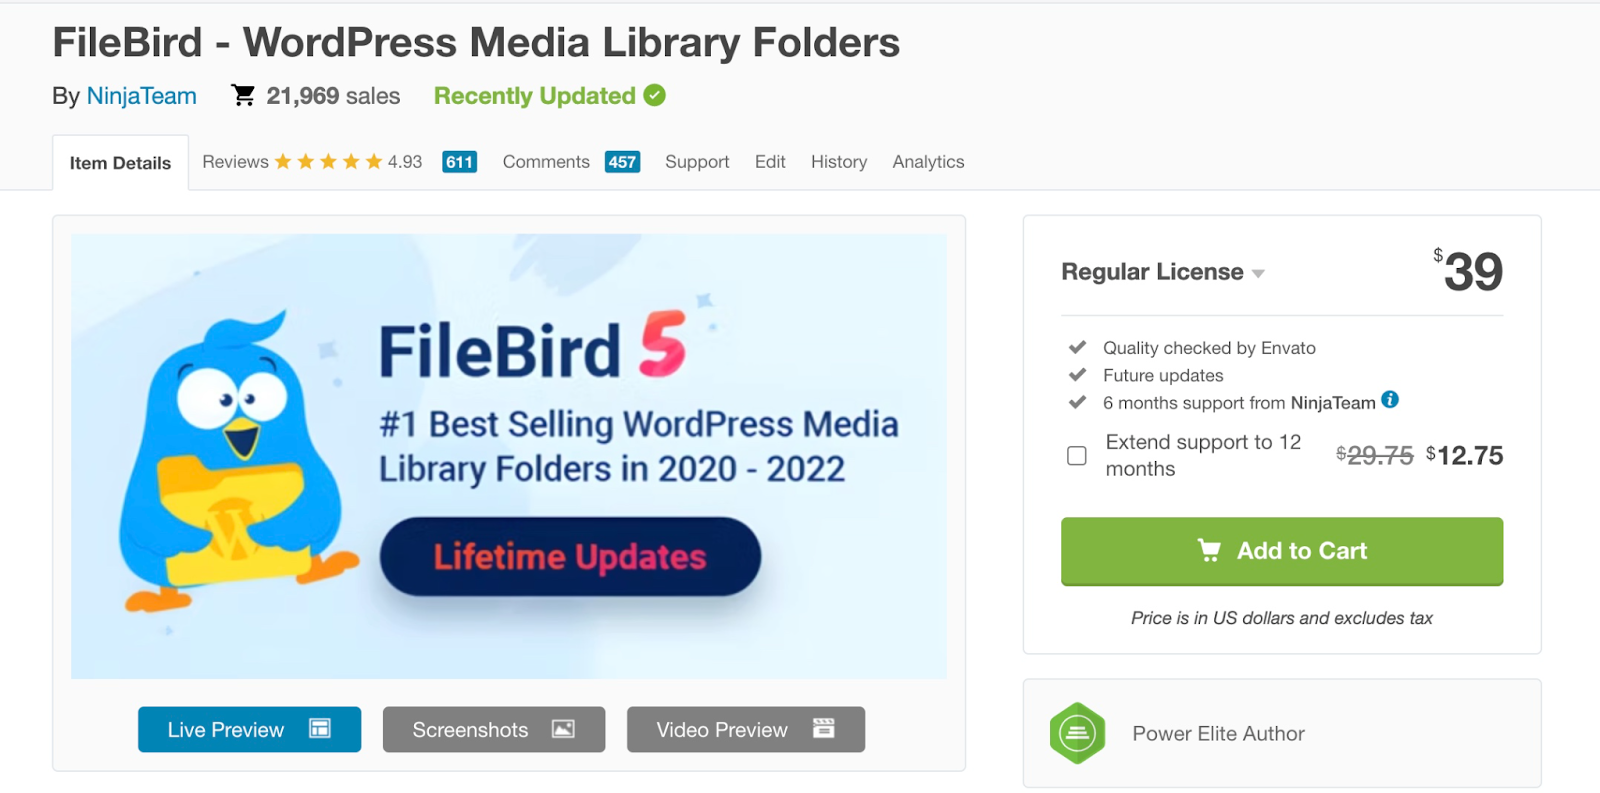 filebird-wordpress-media-library-folders.jpg